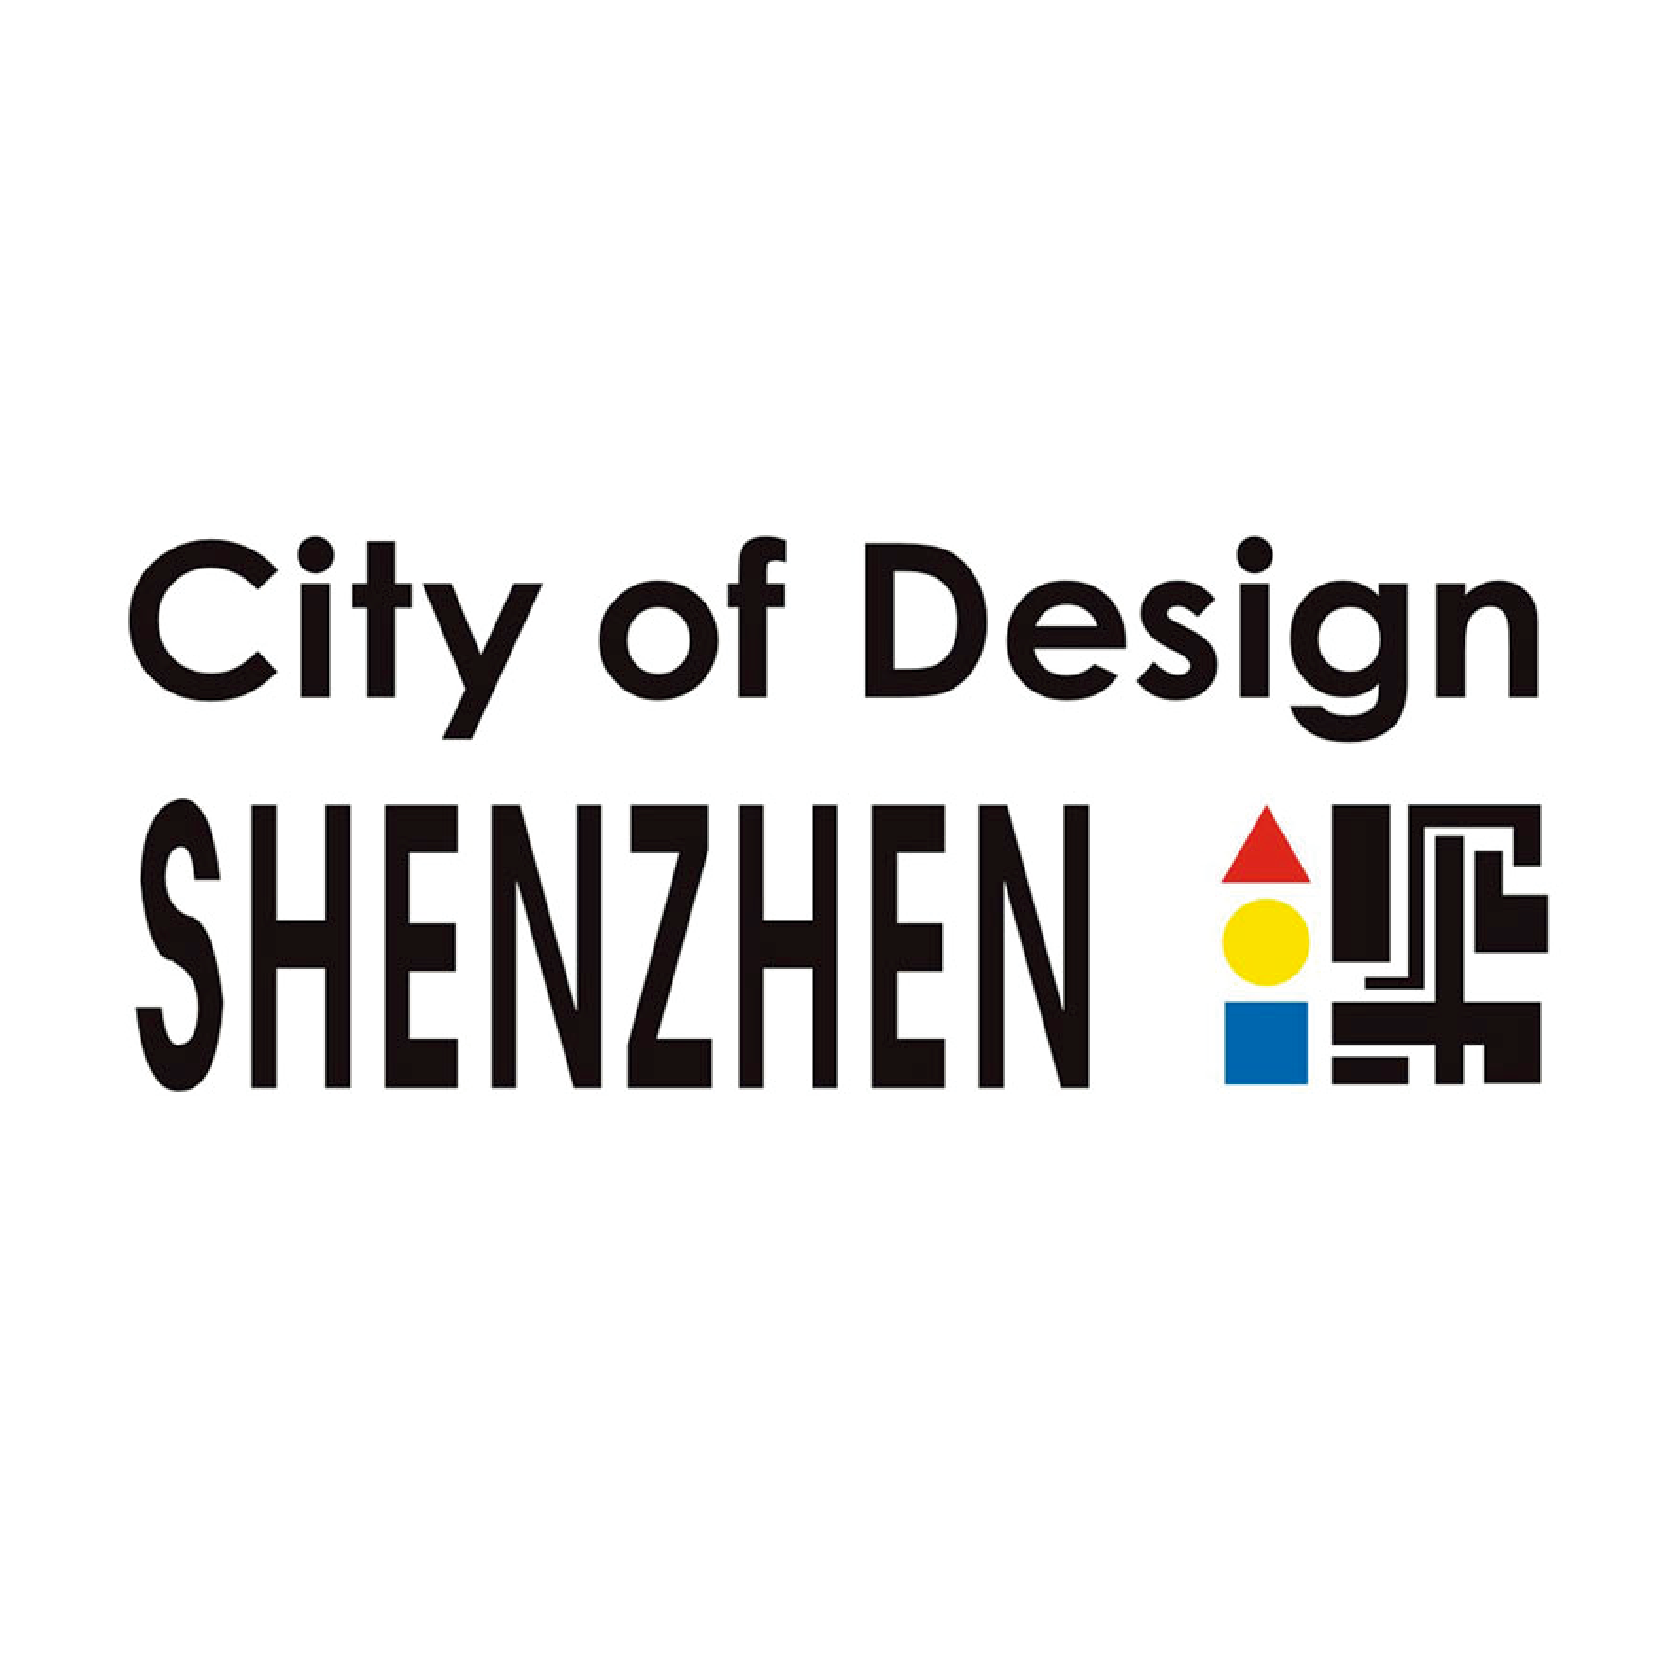 Shenzhen, City of Design